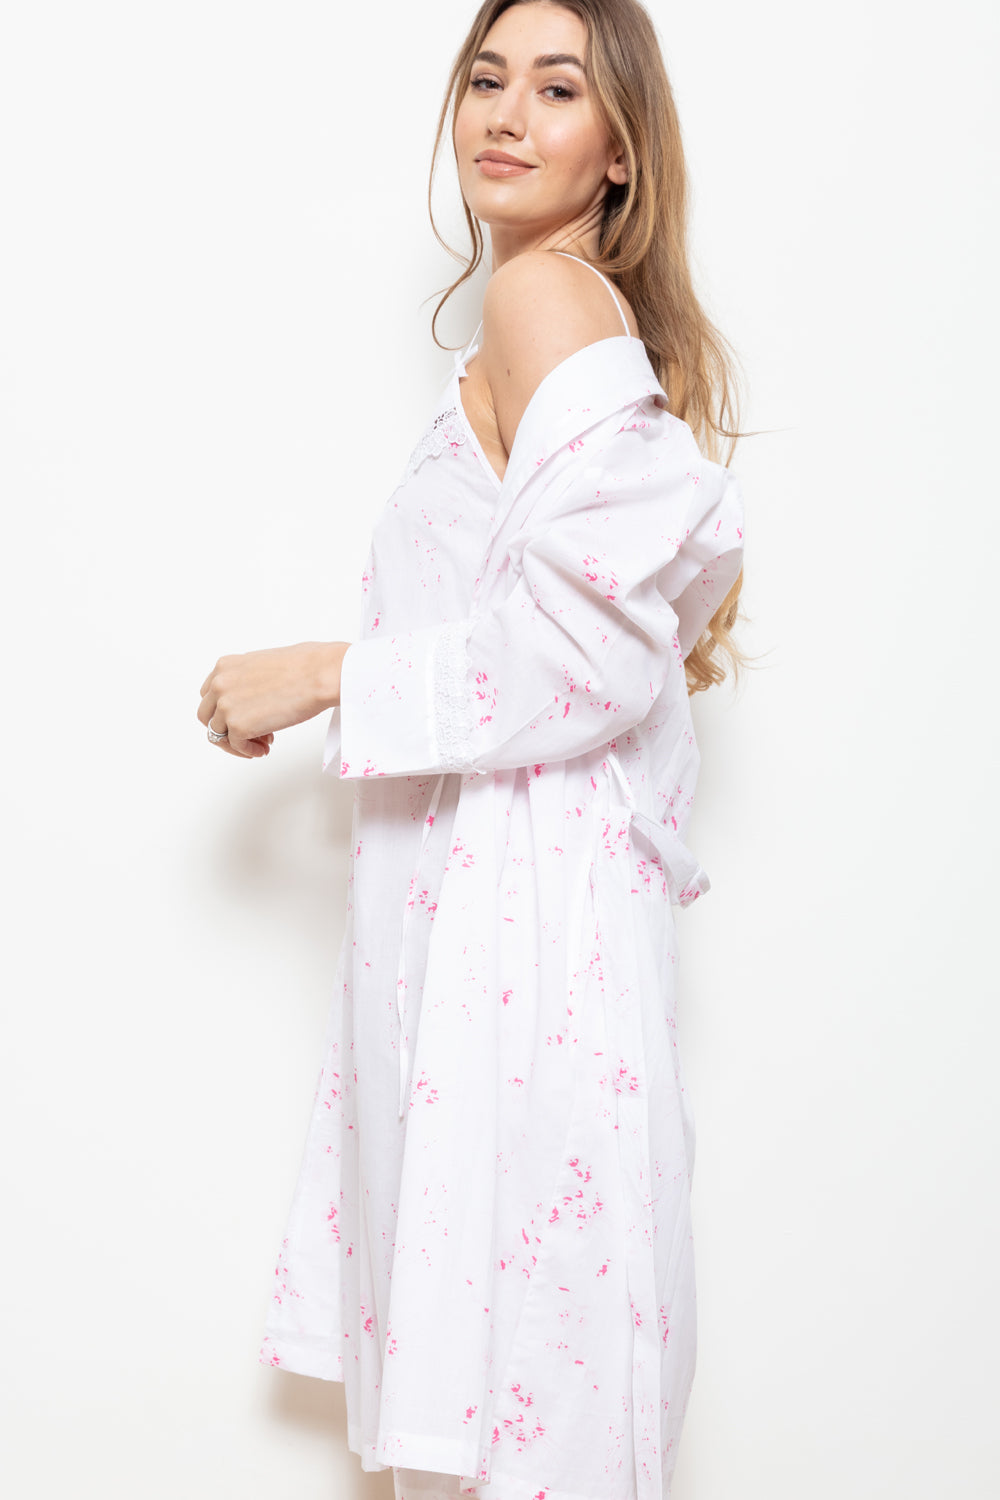 Cottonreal 'Yanira' Pretty Pink Floral & White 100% Cotton Robe Dressing Gown